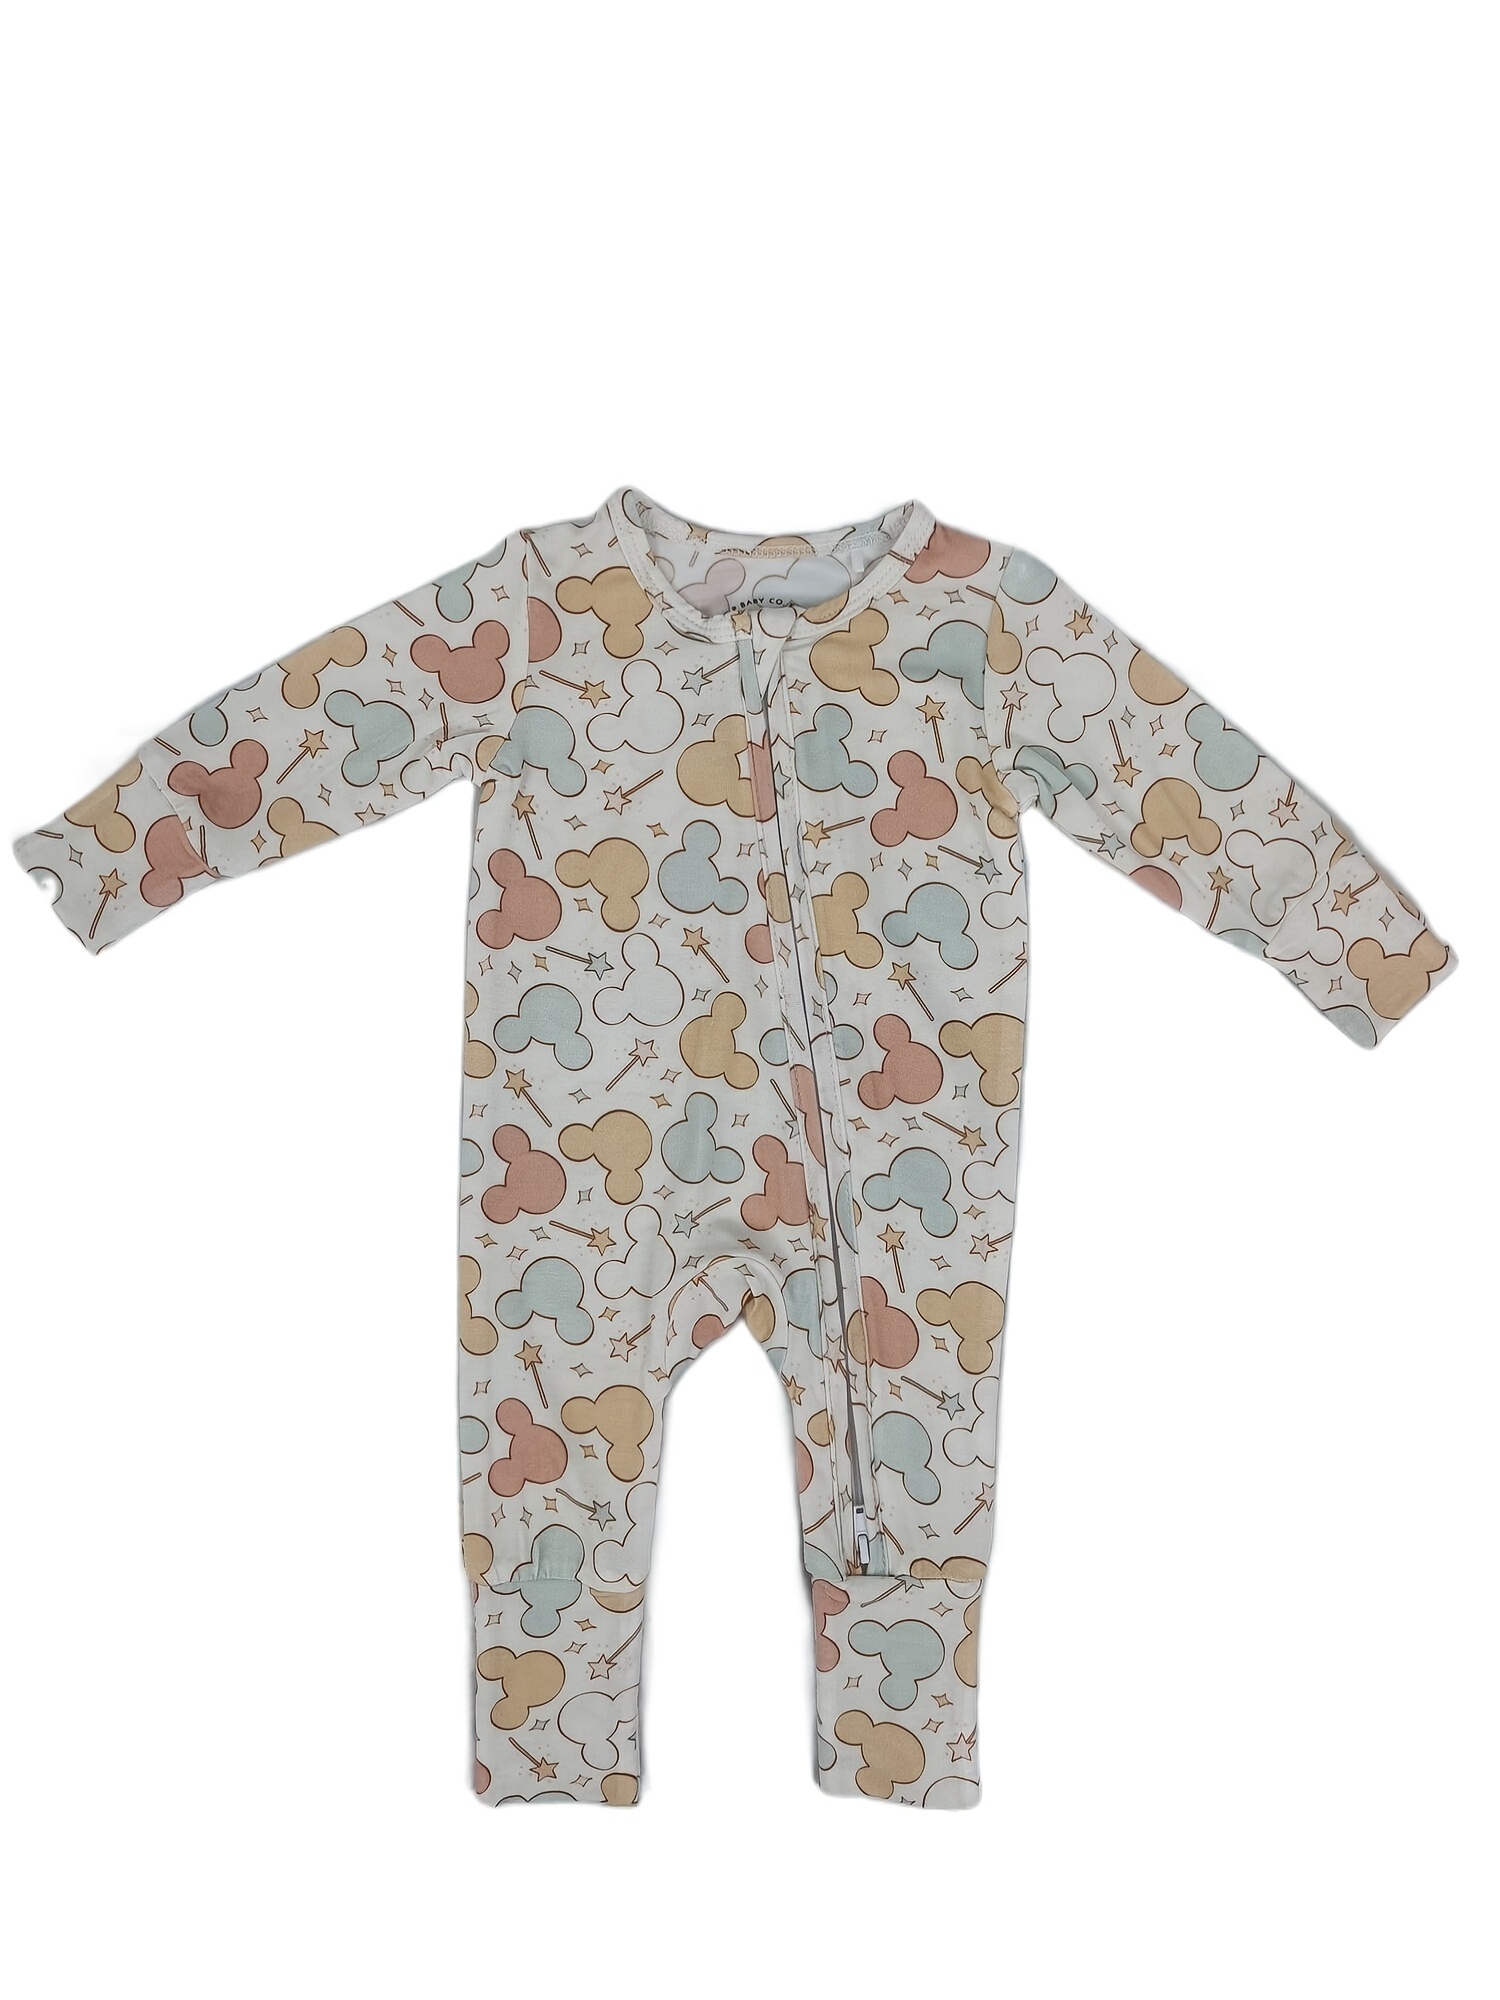 Infant Newborn Baby Boy Girl Clothes Spring Cartoon Pattern Pajamas  Sleepwear Underwear Clothes Sets LJ201223 From Cong05, $10.03